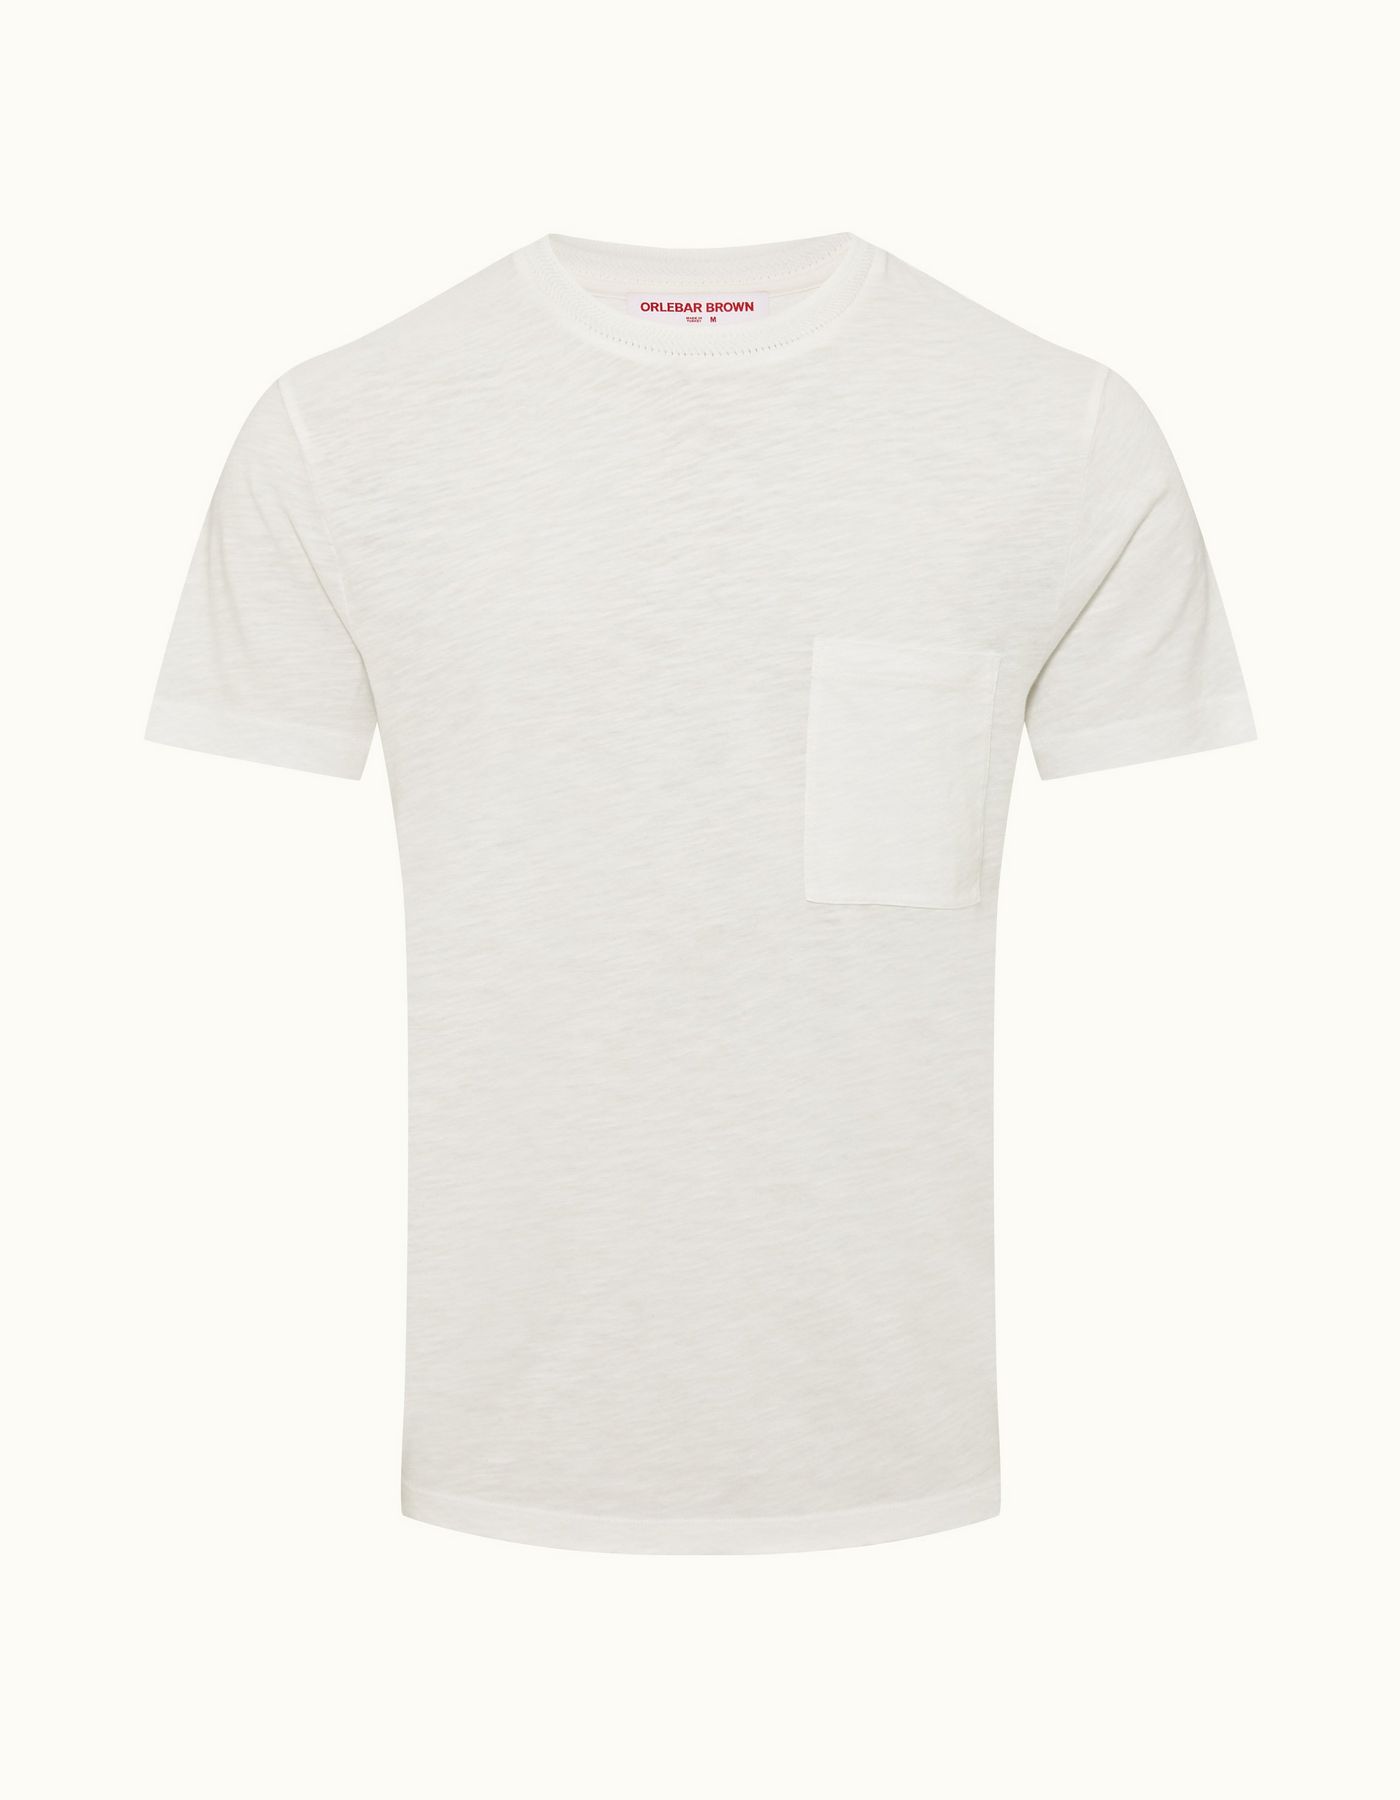 Ob Classic Tee - Mens White Sand Classic Fit Crewneck Garment Dye Cotton T-shirt